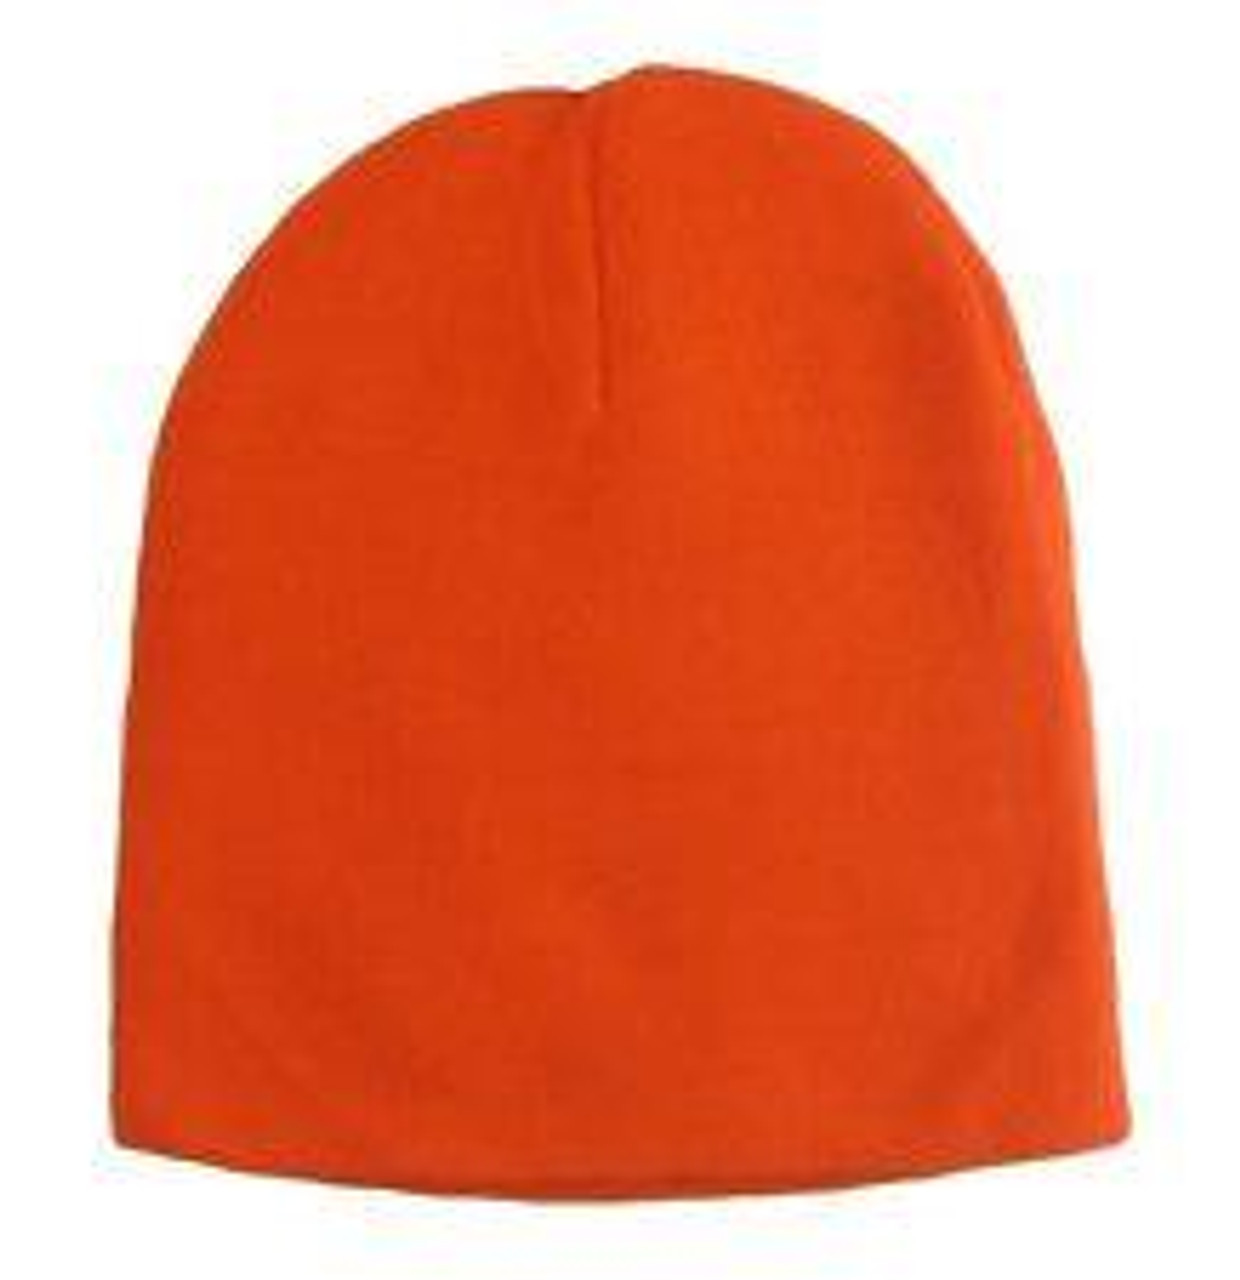 Jacob Ash Knit Stretch Cap - Blaze Orange - Dance's Sporting Goods